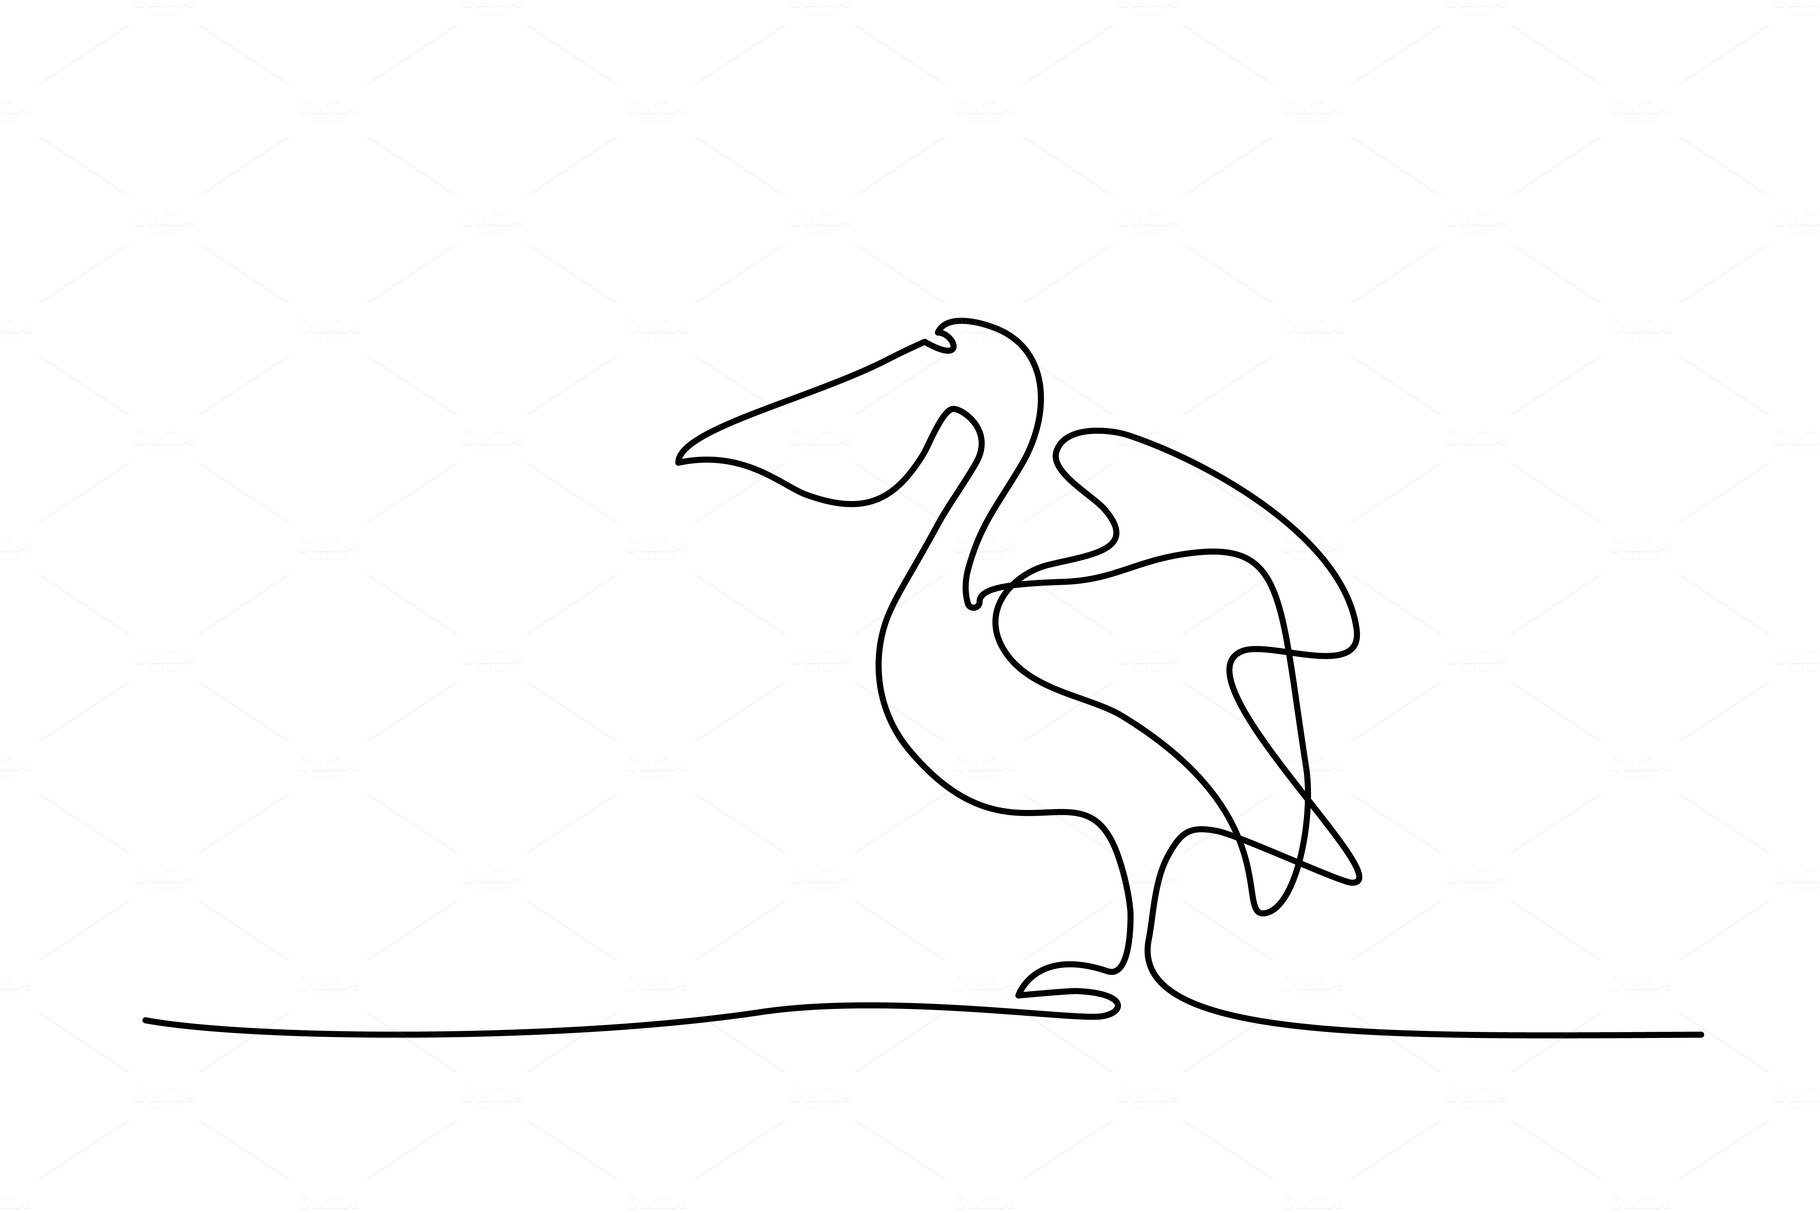 Pelican minimalist symbol one line cover image.